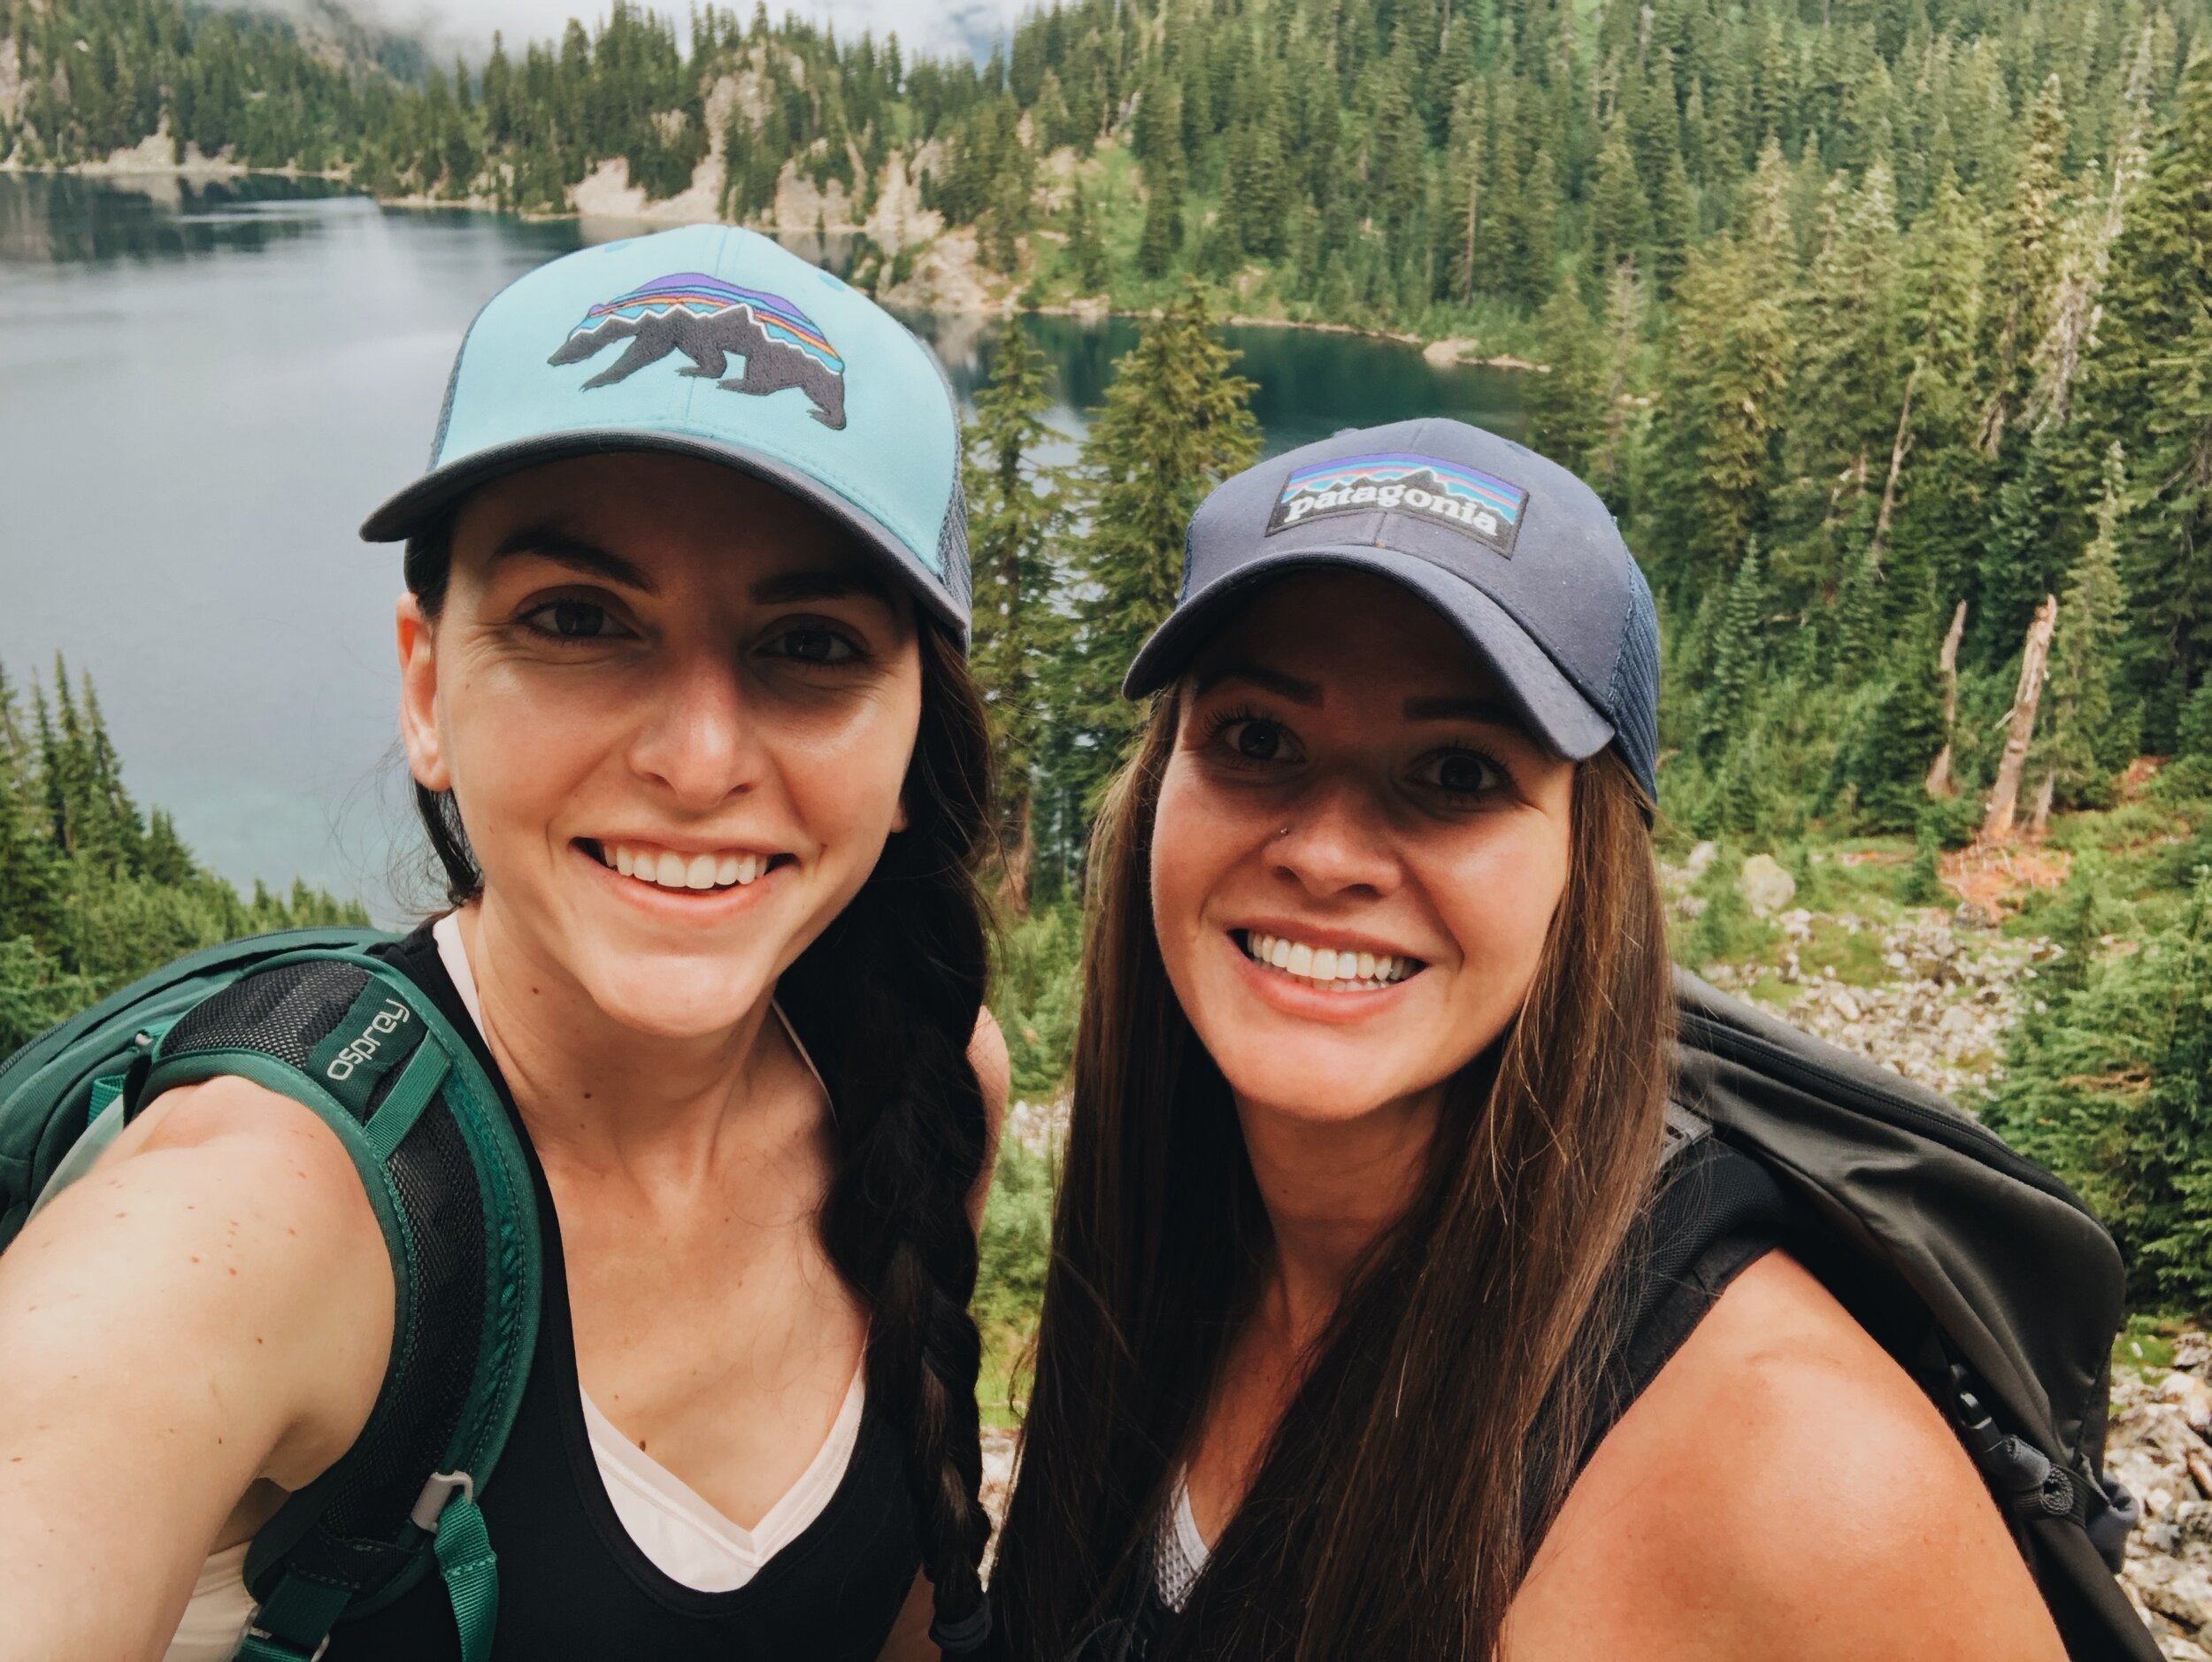  Mount Rainier wedding photographer, Jessi Cavey,&nbsp;hikes Snow Lake with friend in Washington. 